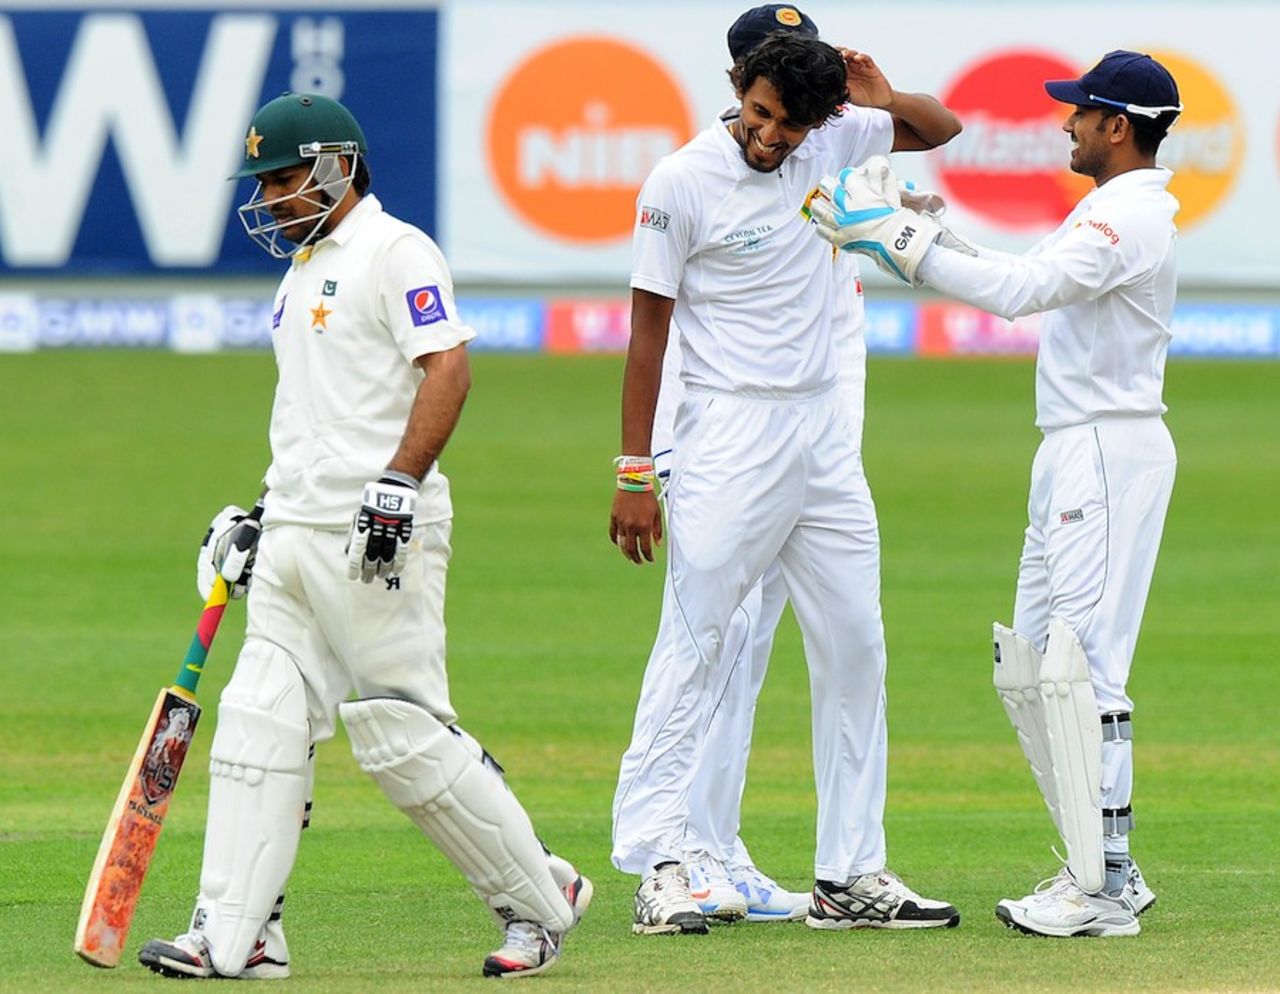 Suranga Lakmal bowled Sarfraz Ahmed with reverse swing, Pakistan v Sri Lanka, 2nd Test, Dubai, 5th day, January 12, 2014